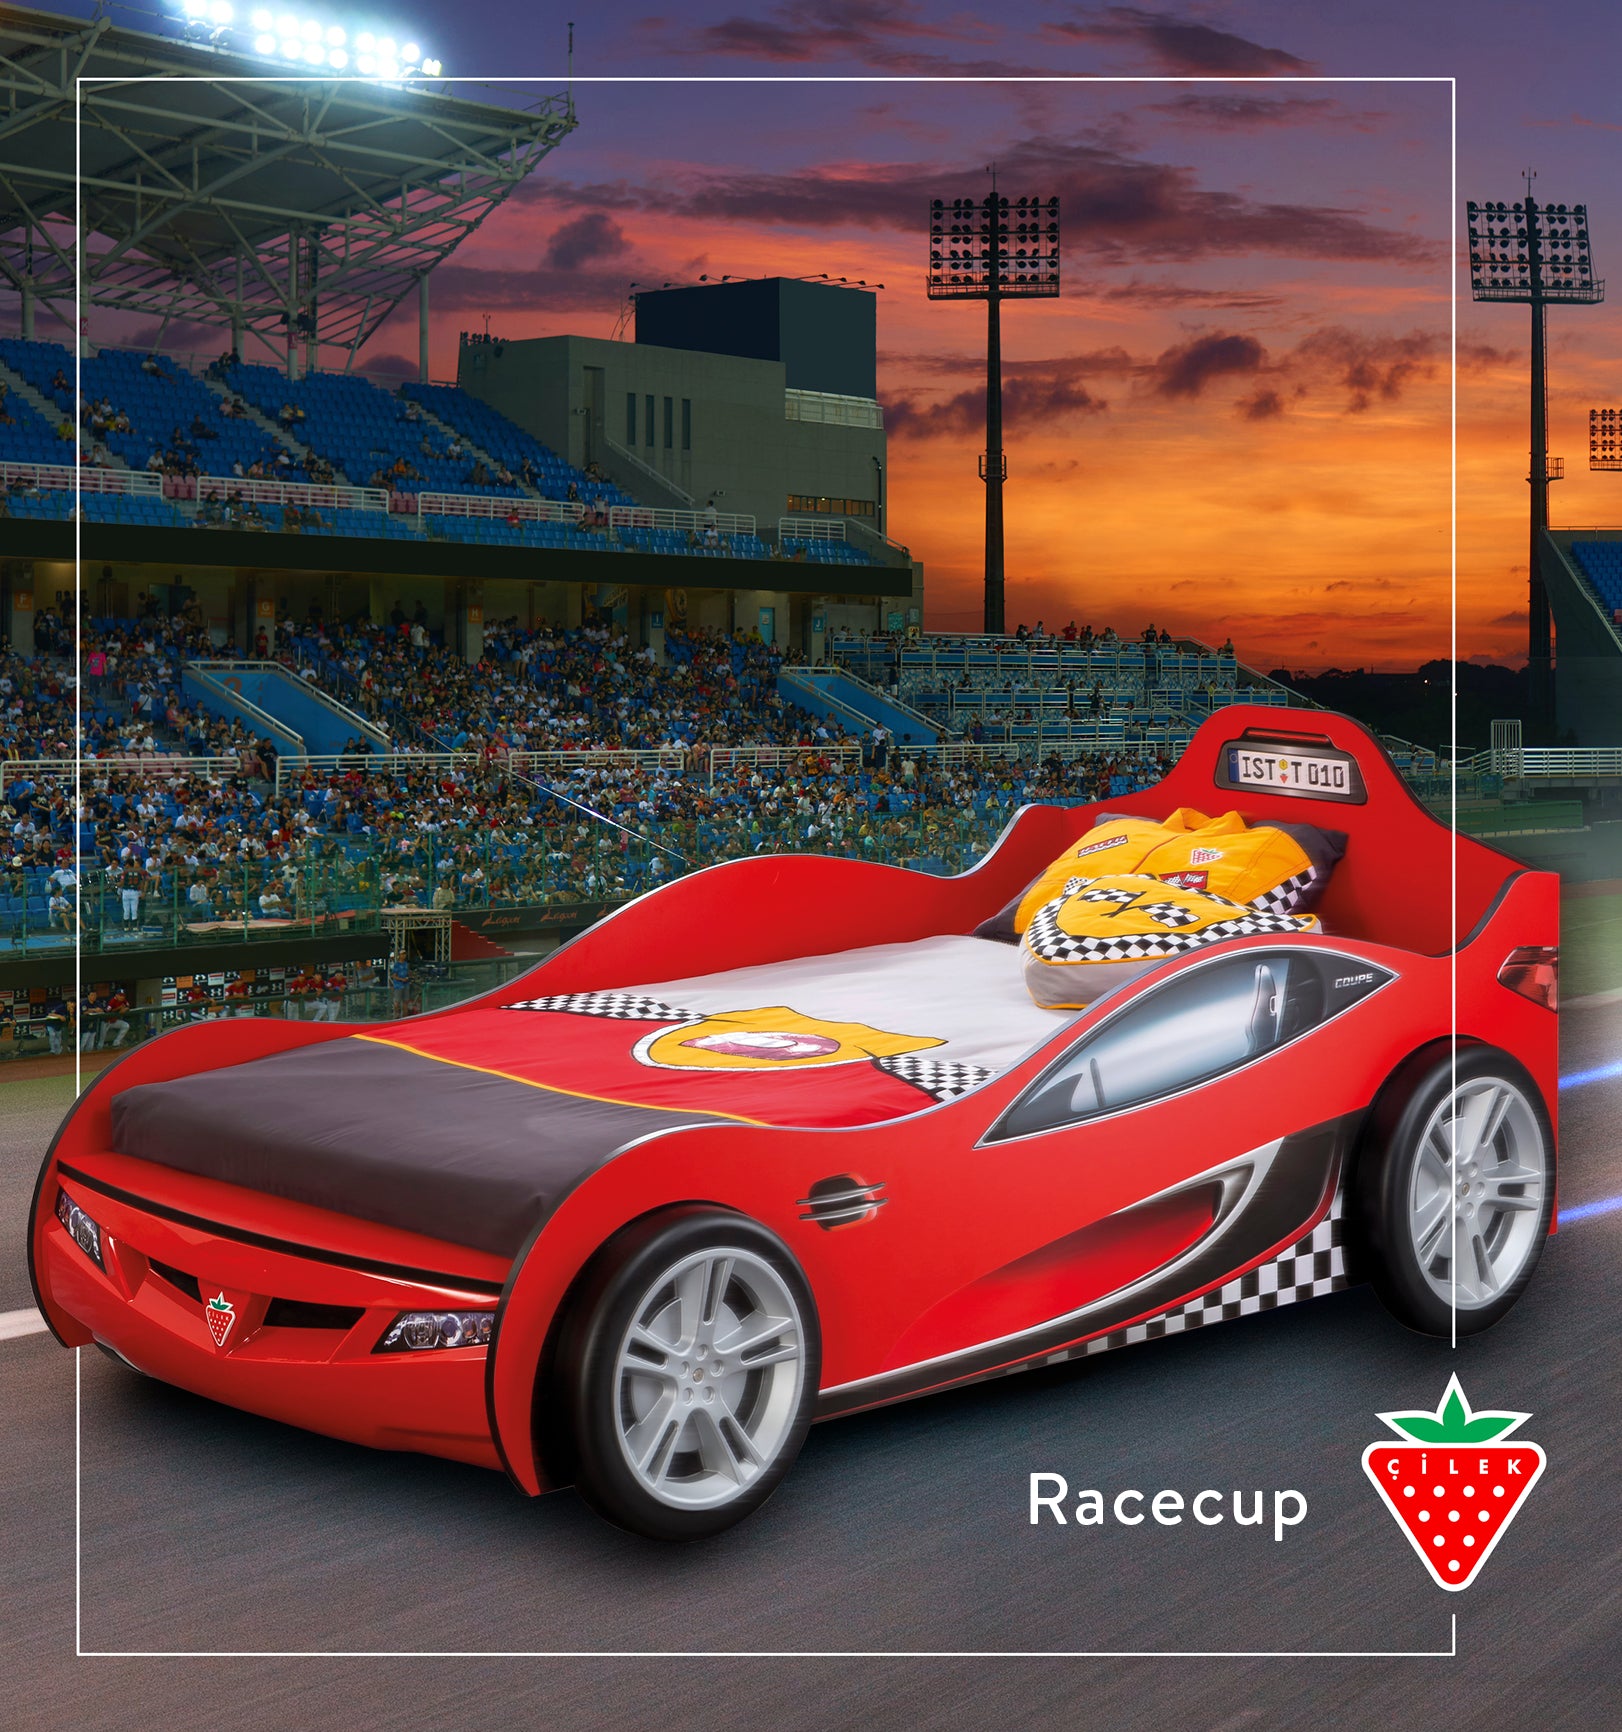 Racecup